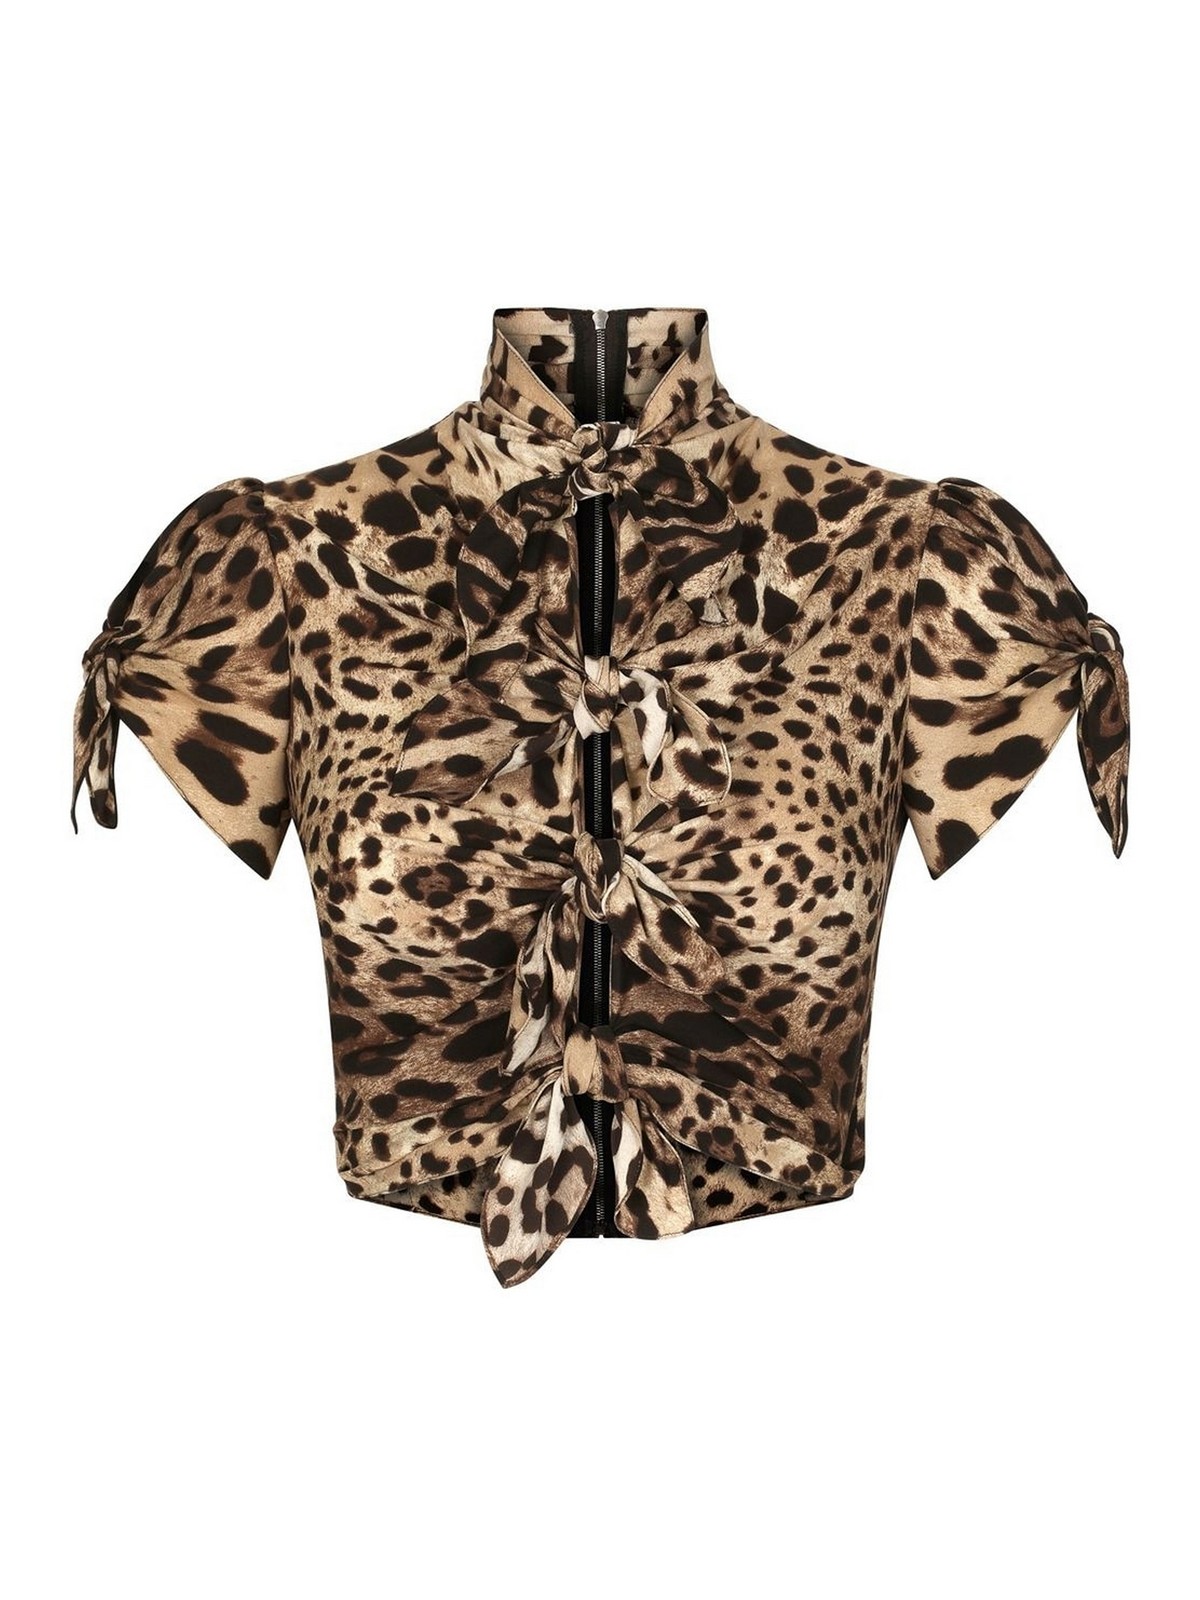 Dolce & Gabbana Leopard-print cropped top